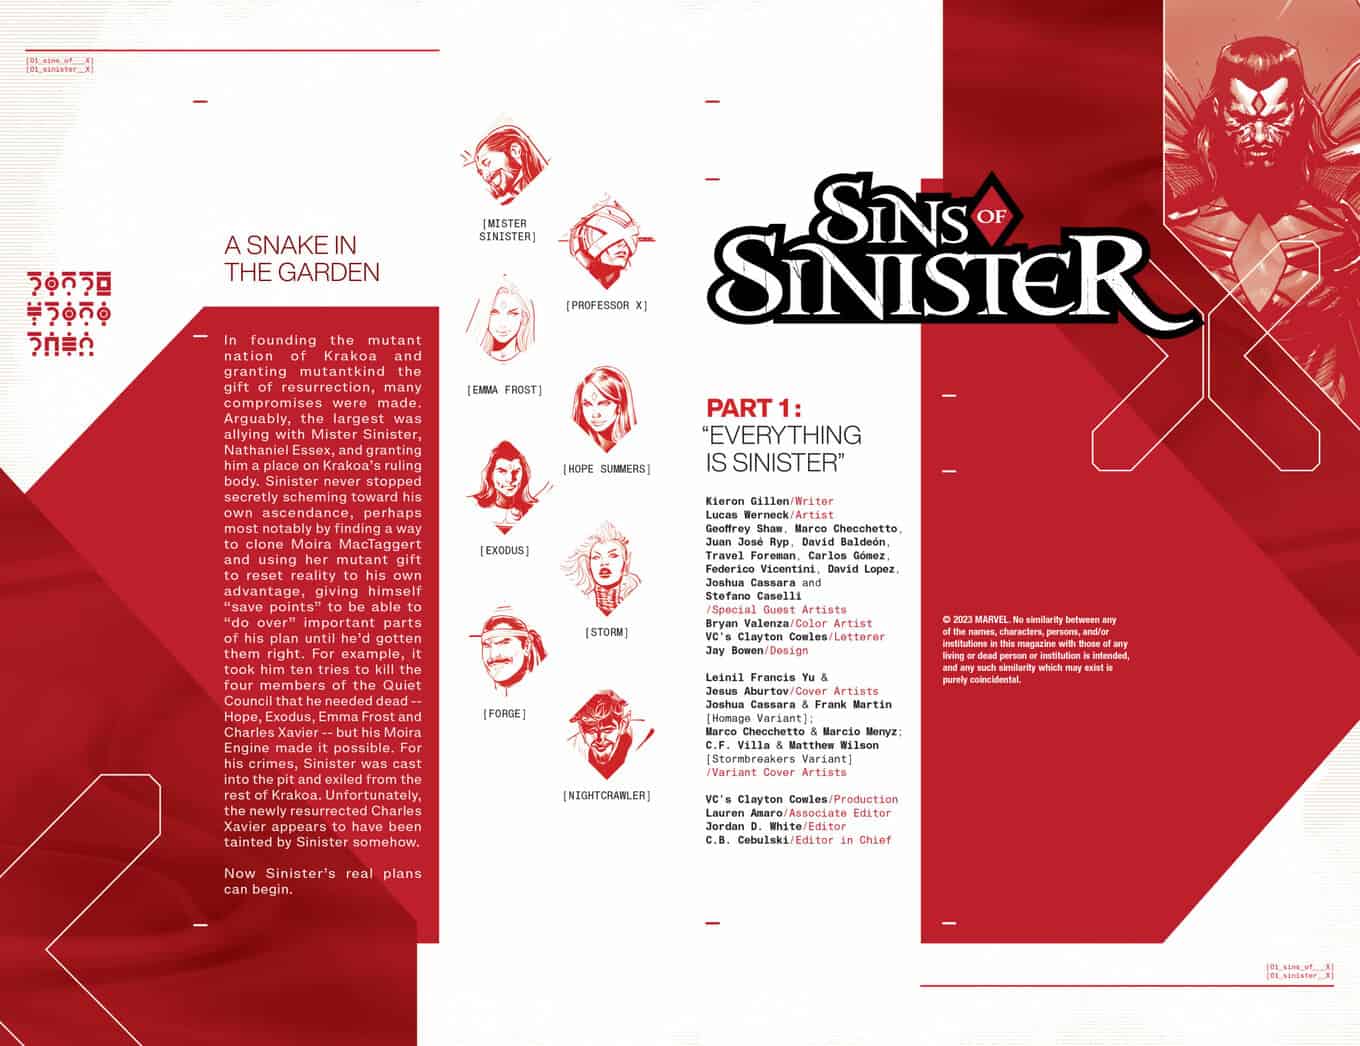 Tội lỗi của Sinister #1 spoilers 0-Z